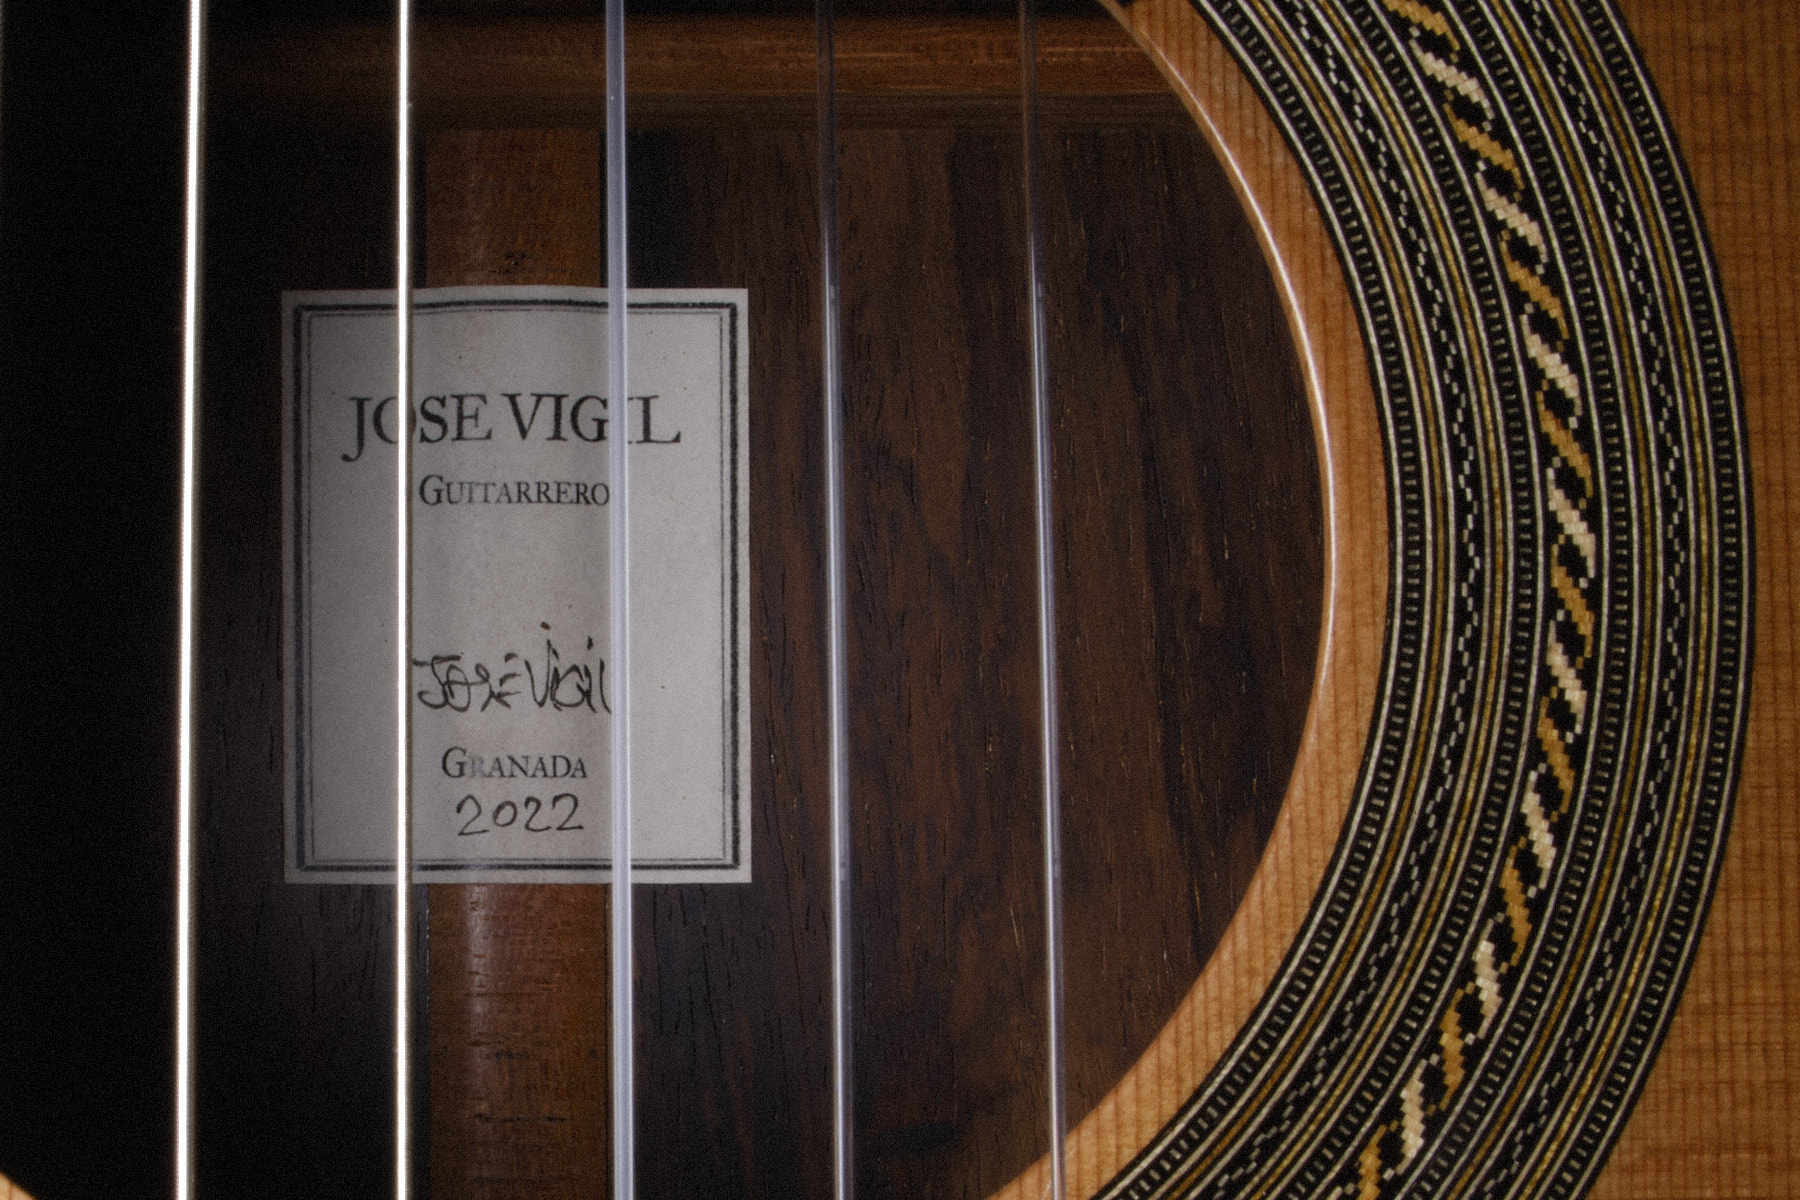 Jose Vigil 2022 Classical Guitar Label